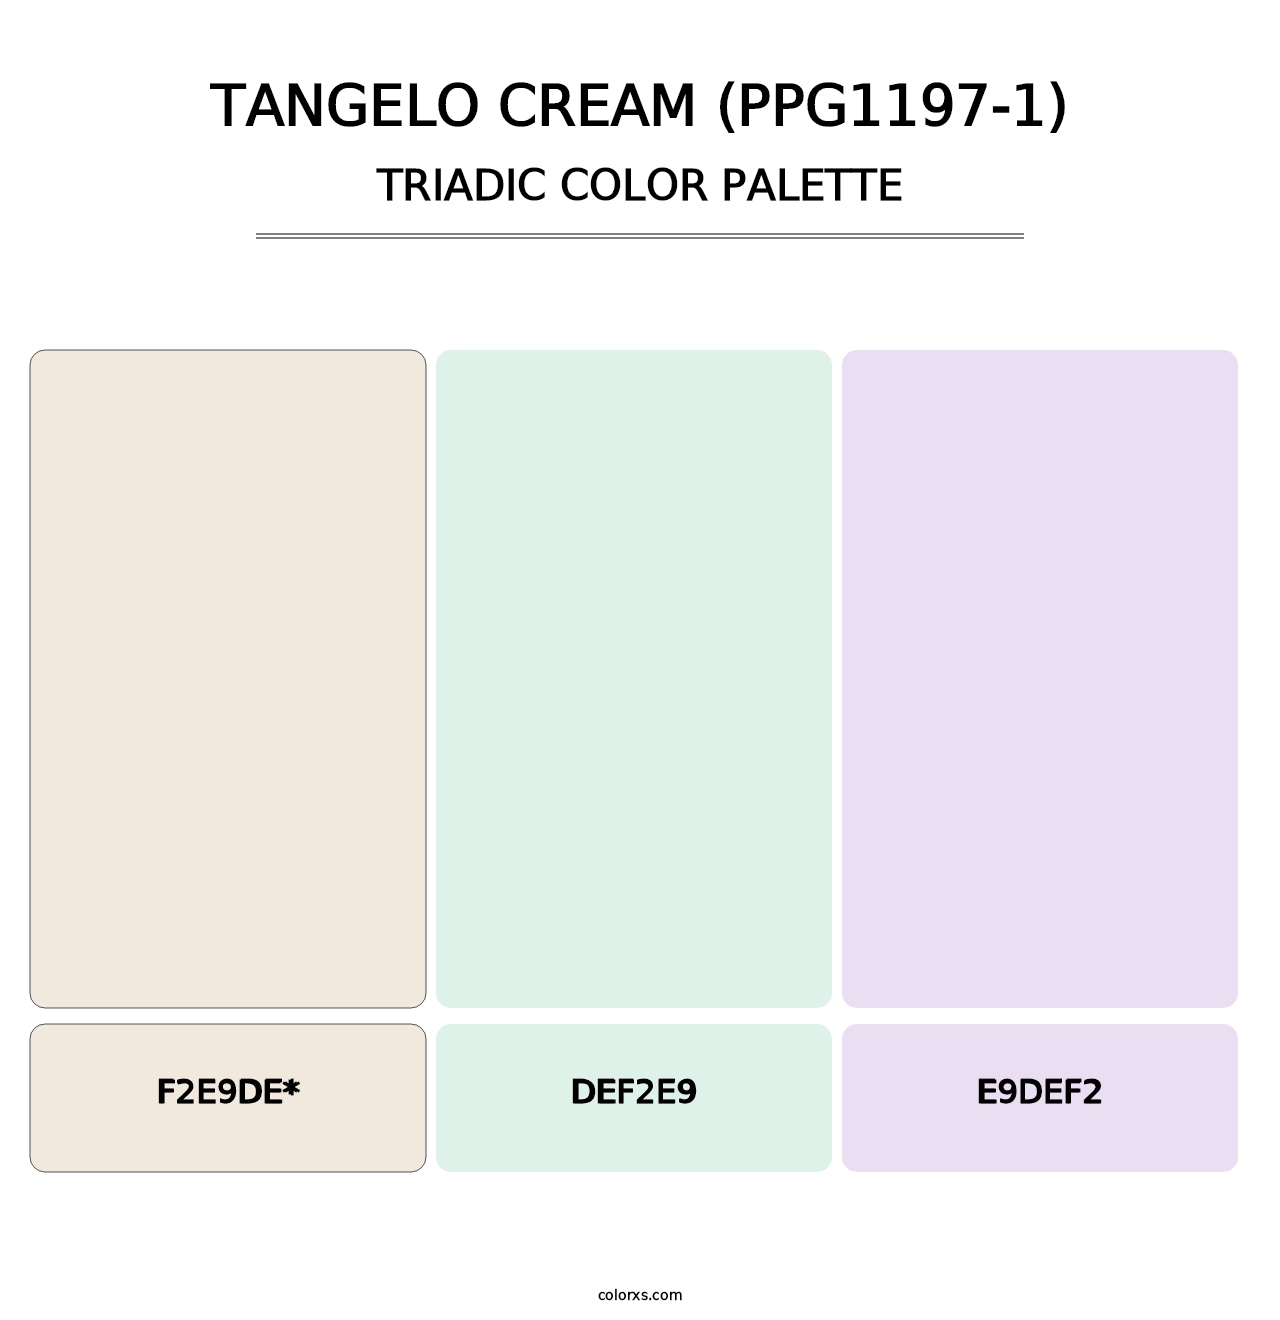 Tangelo Cream (PPG1197-1) - Triadic Color Palette